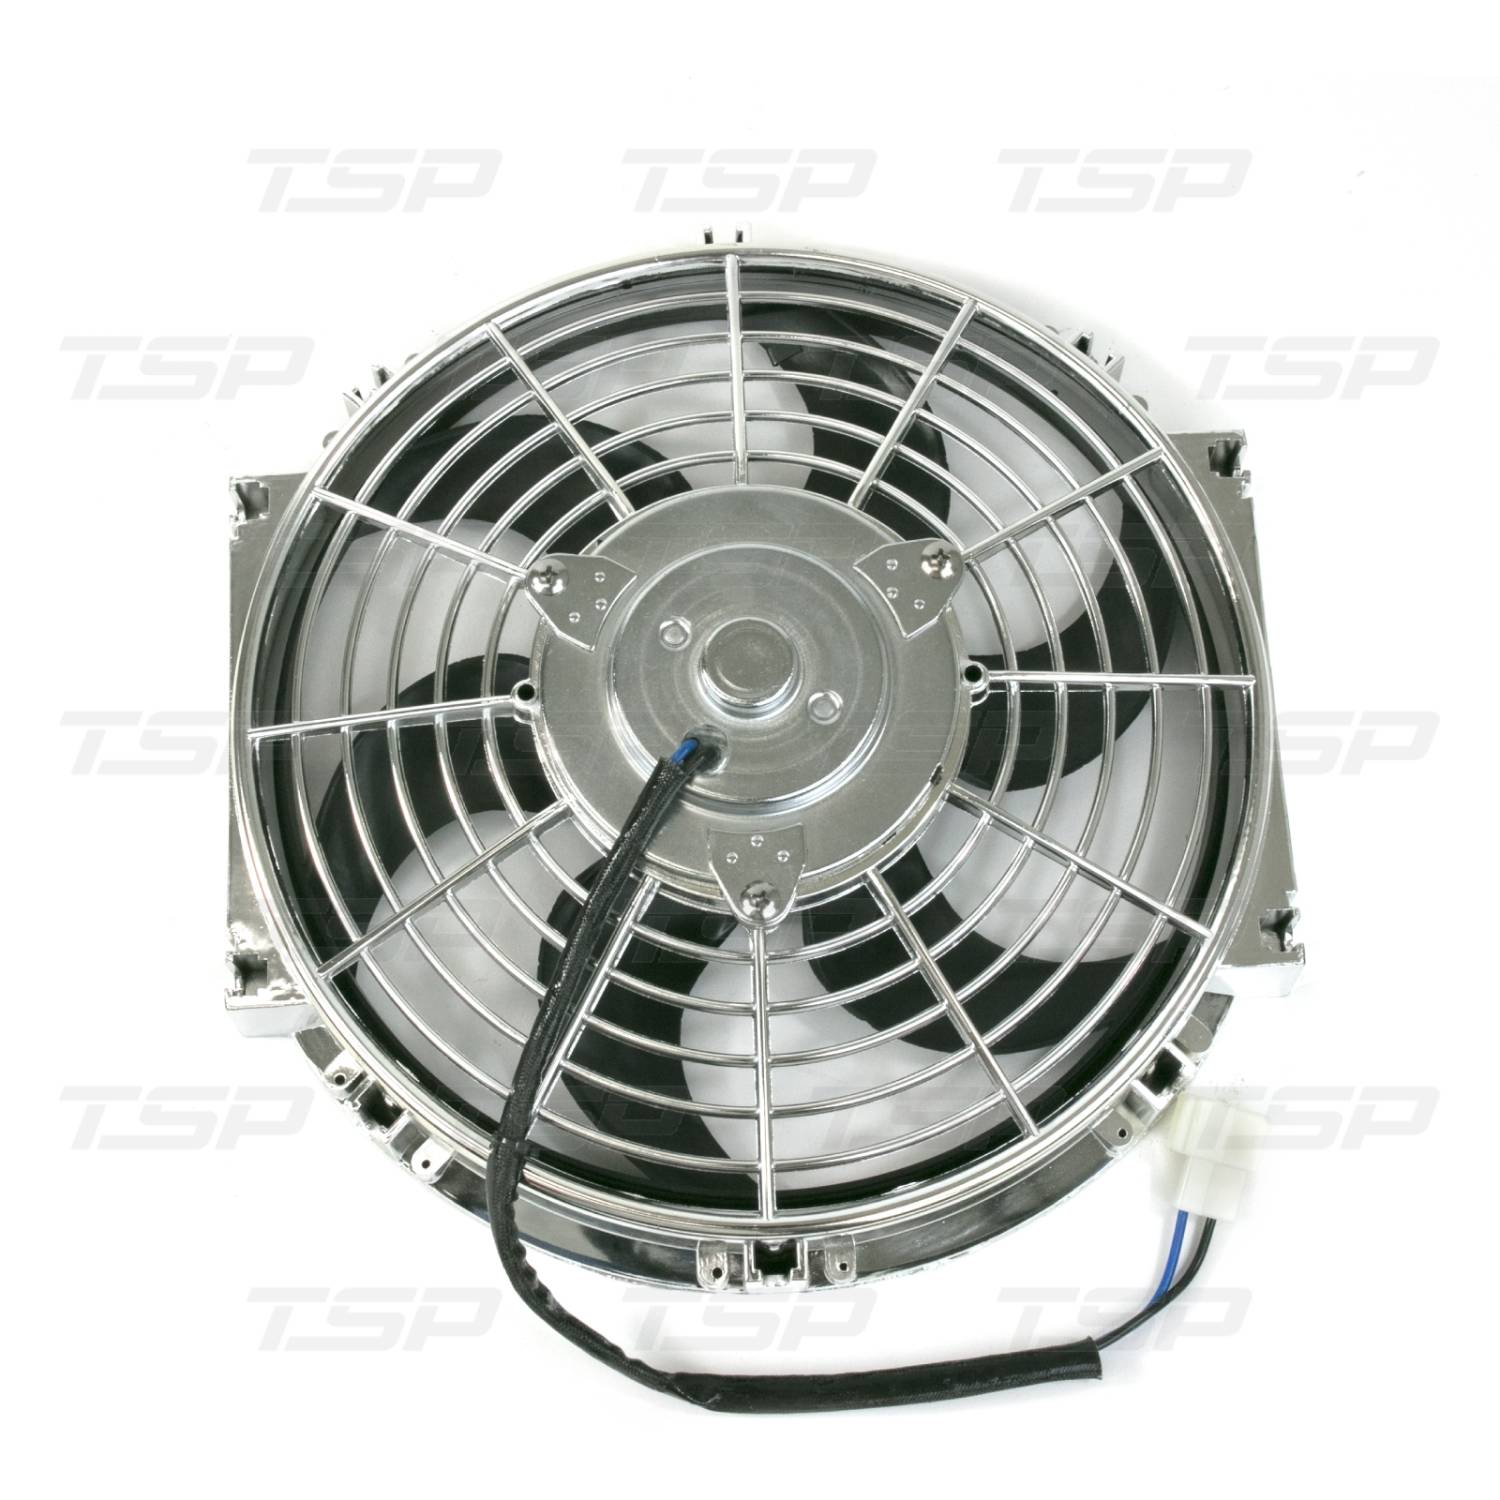 Top Street Performance HC6102 10 Universal Radiator Fan with S-Blades 120W/850 CFM 